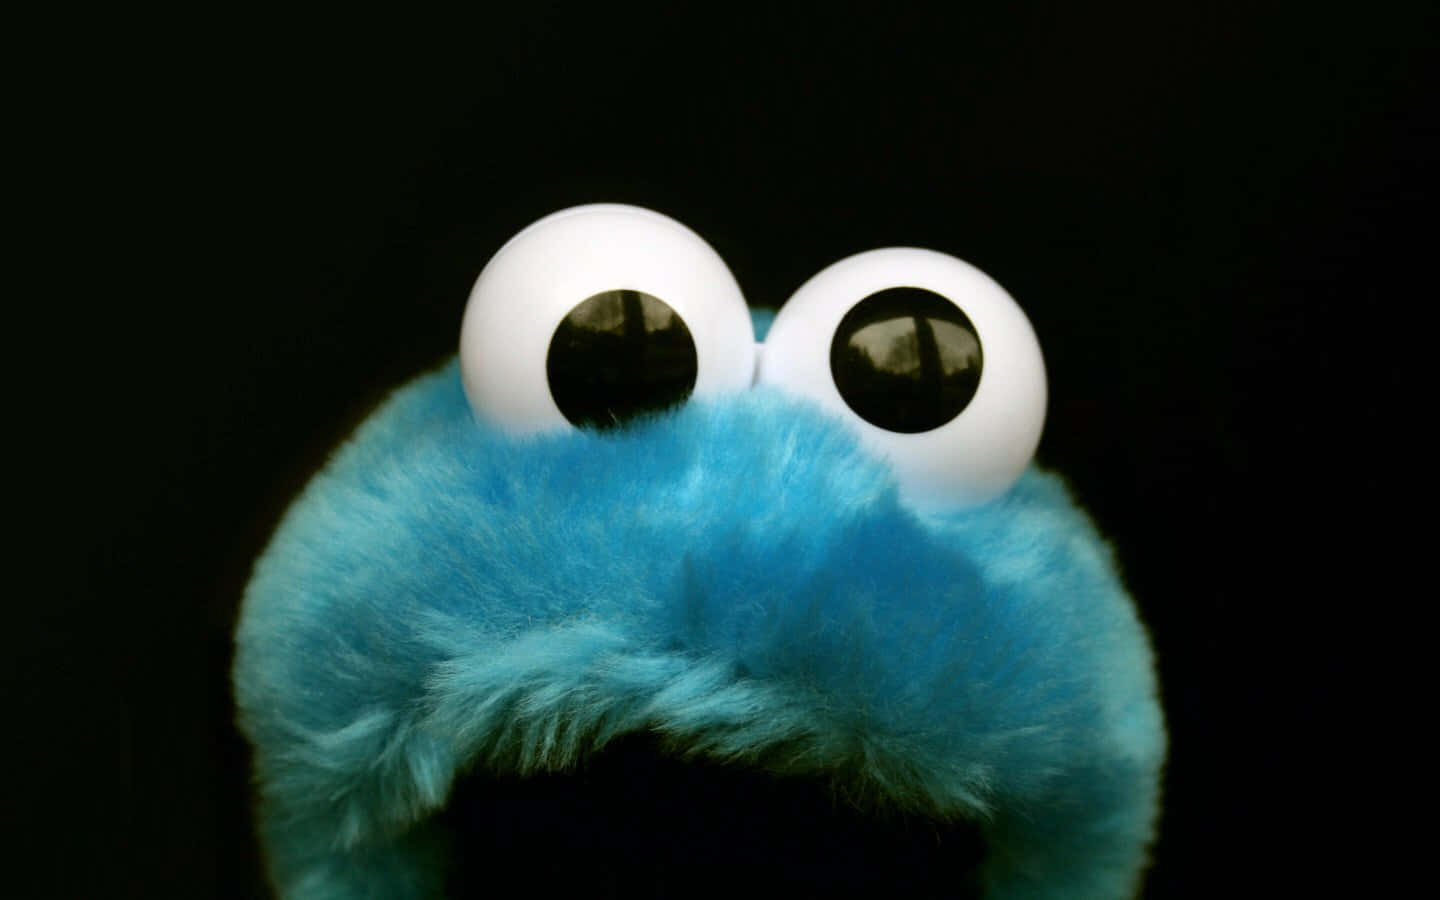 Cookie Monster happily munching on cookies.